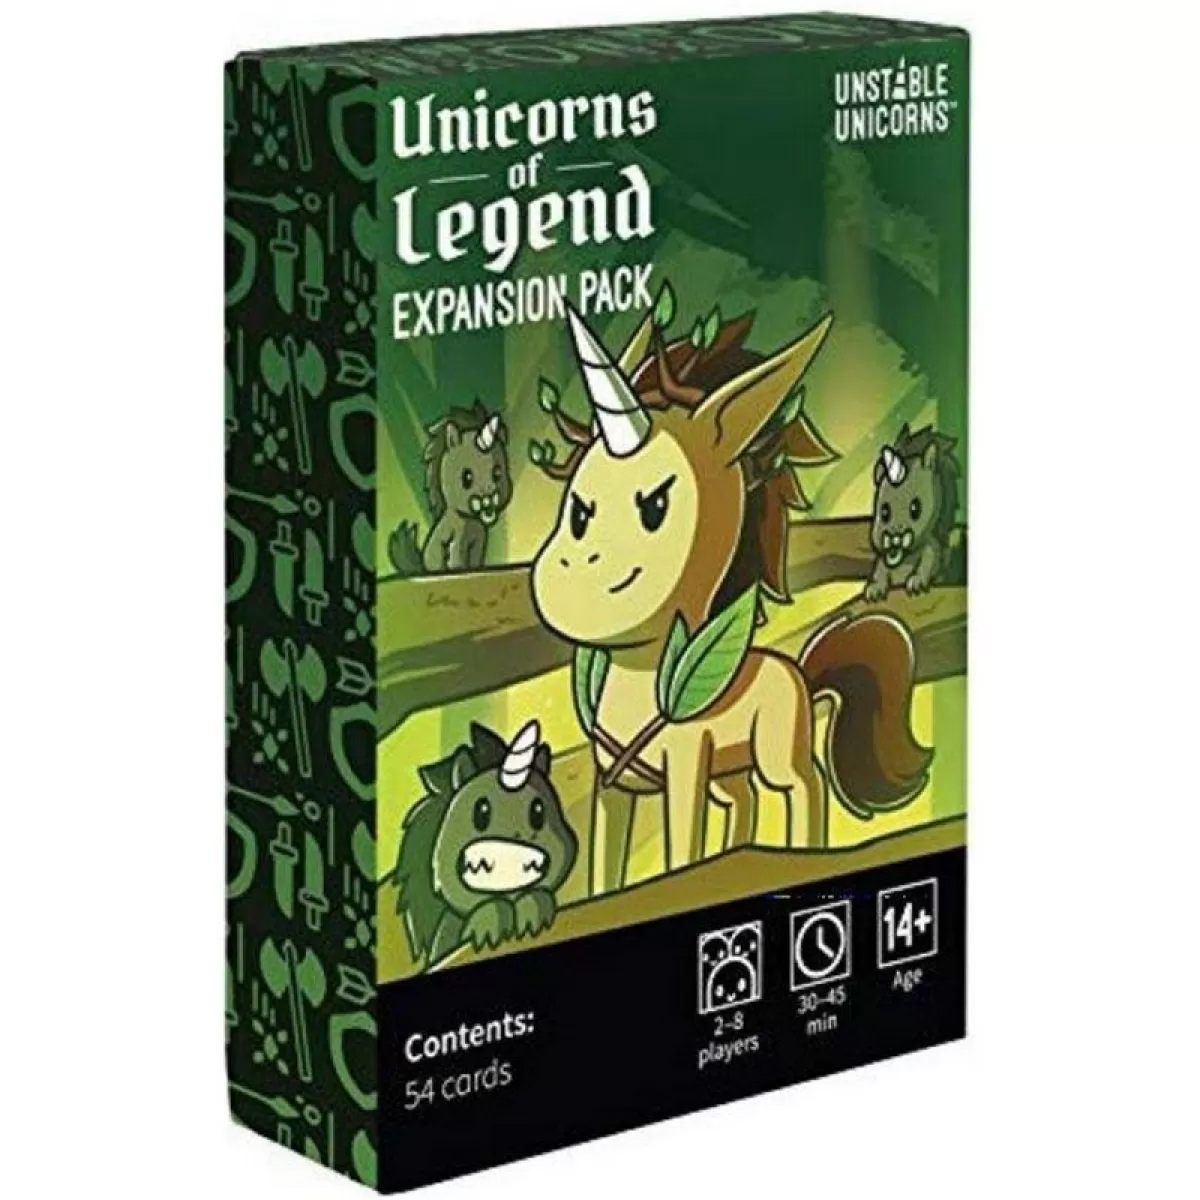 Unstable unicorns: Unicorns of legend pack